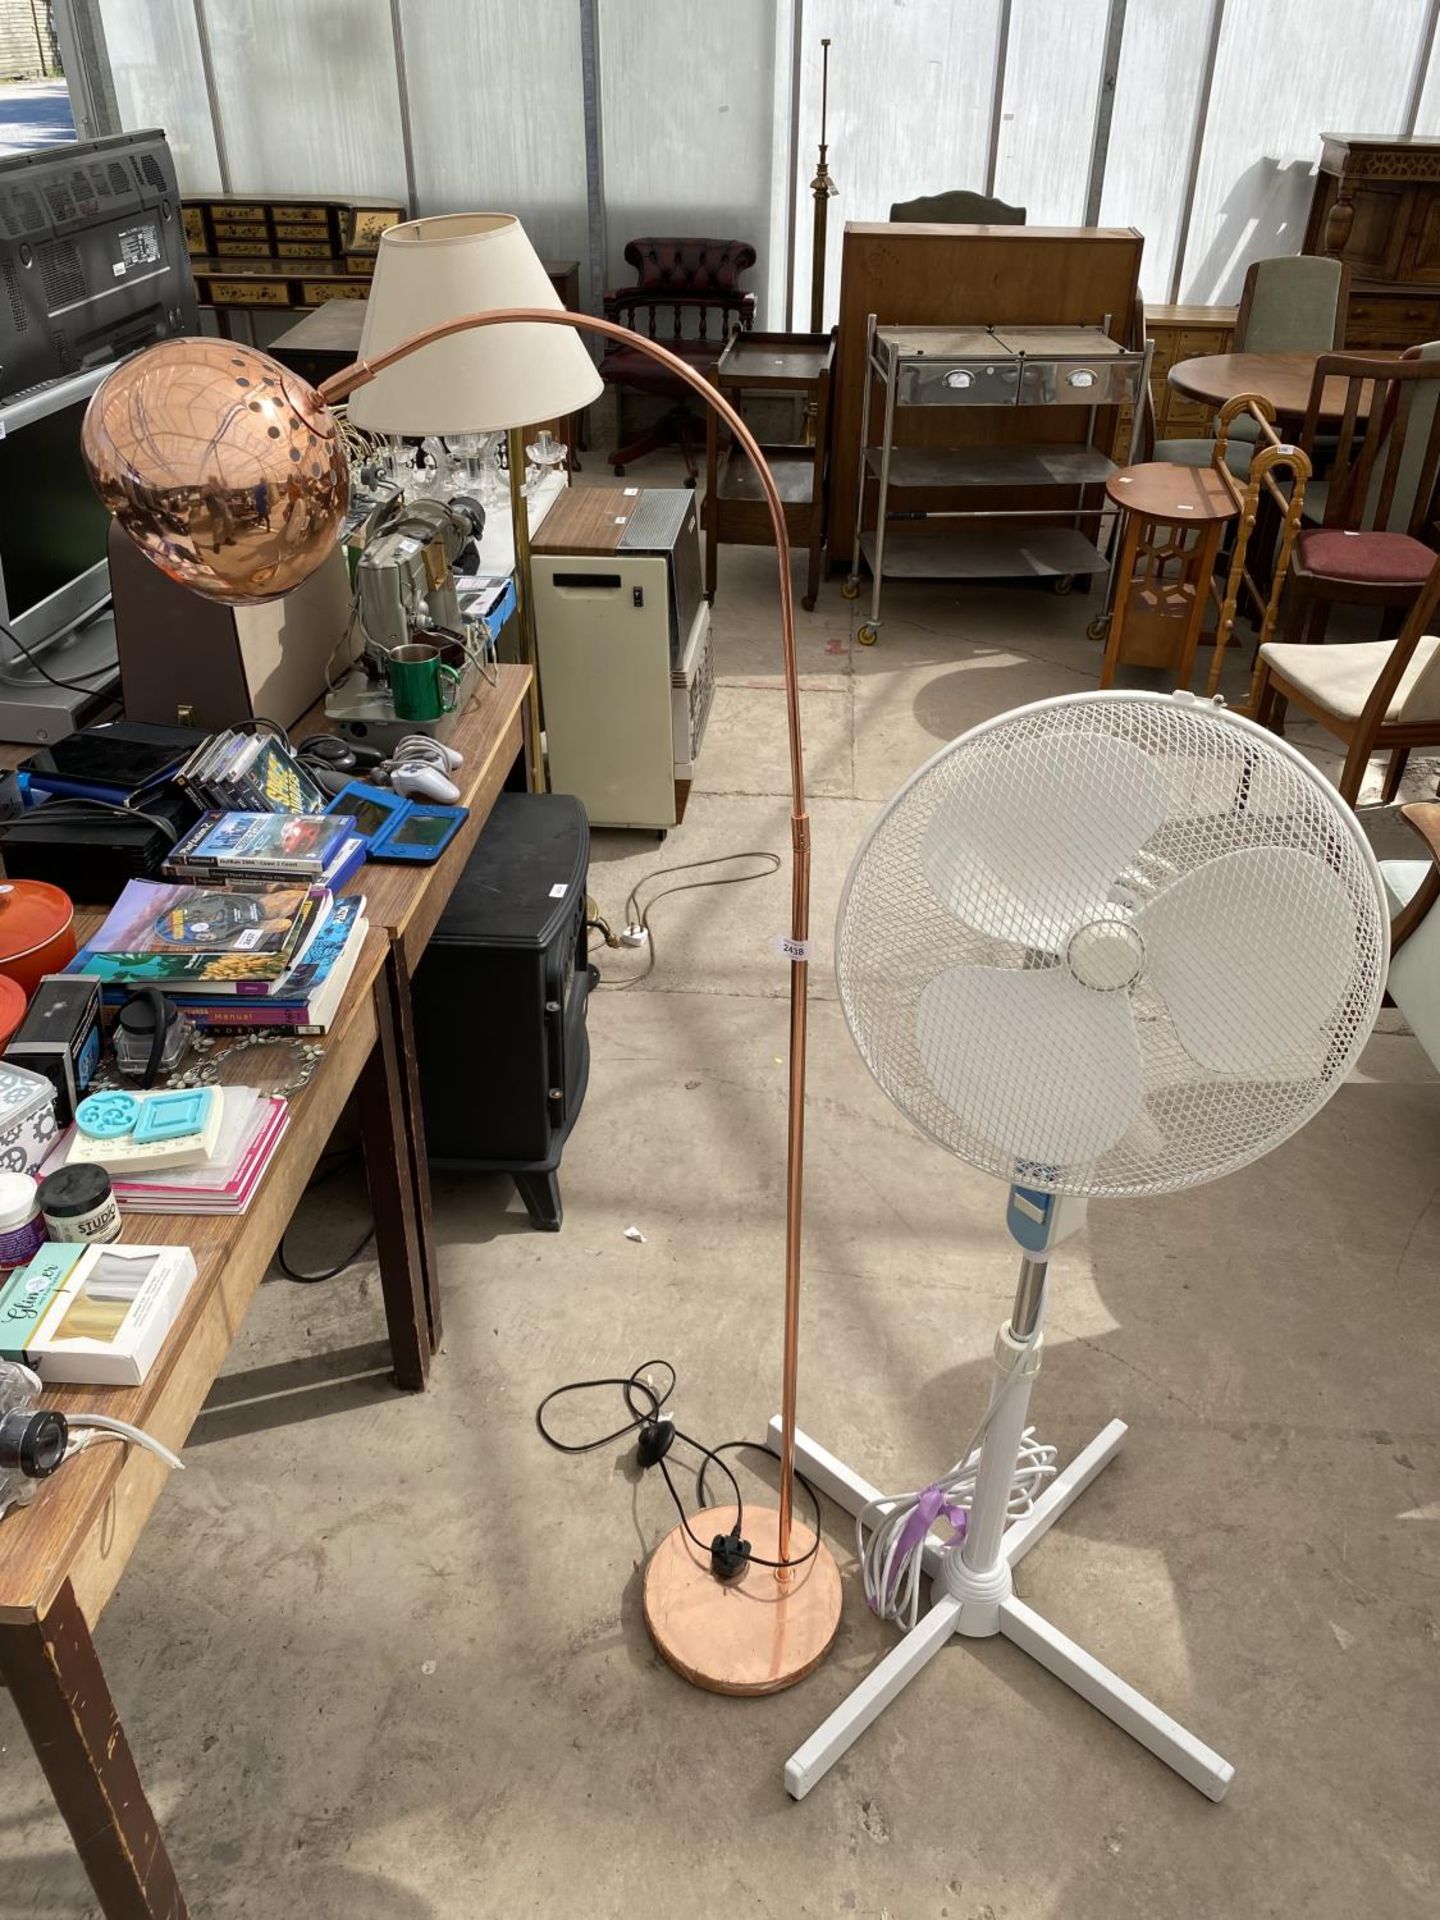 A TALL FAN AND A METAL STANDARD LAMP